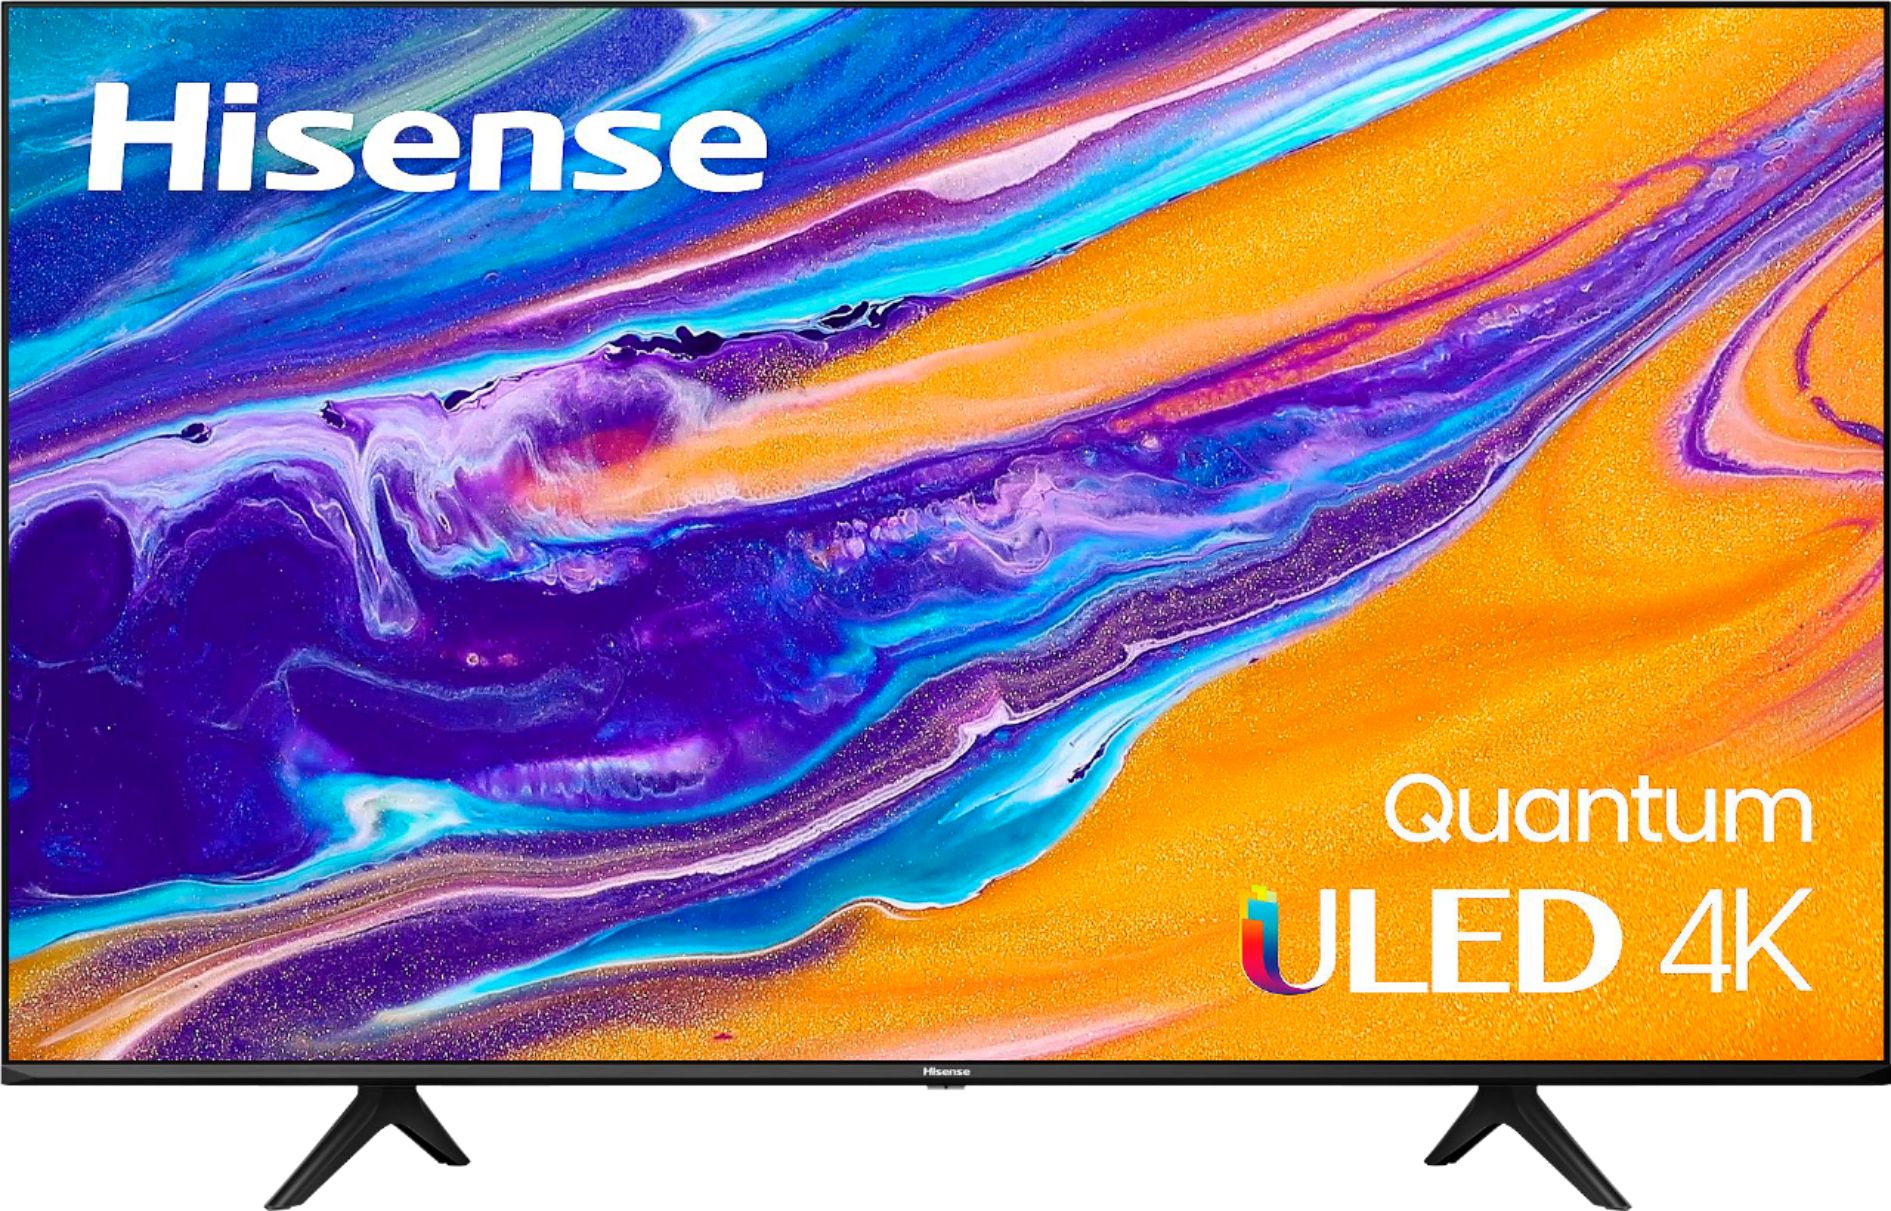 75" Hisense U6G Quantum ULED 4K 60Hz Smart Android TV $799.99